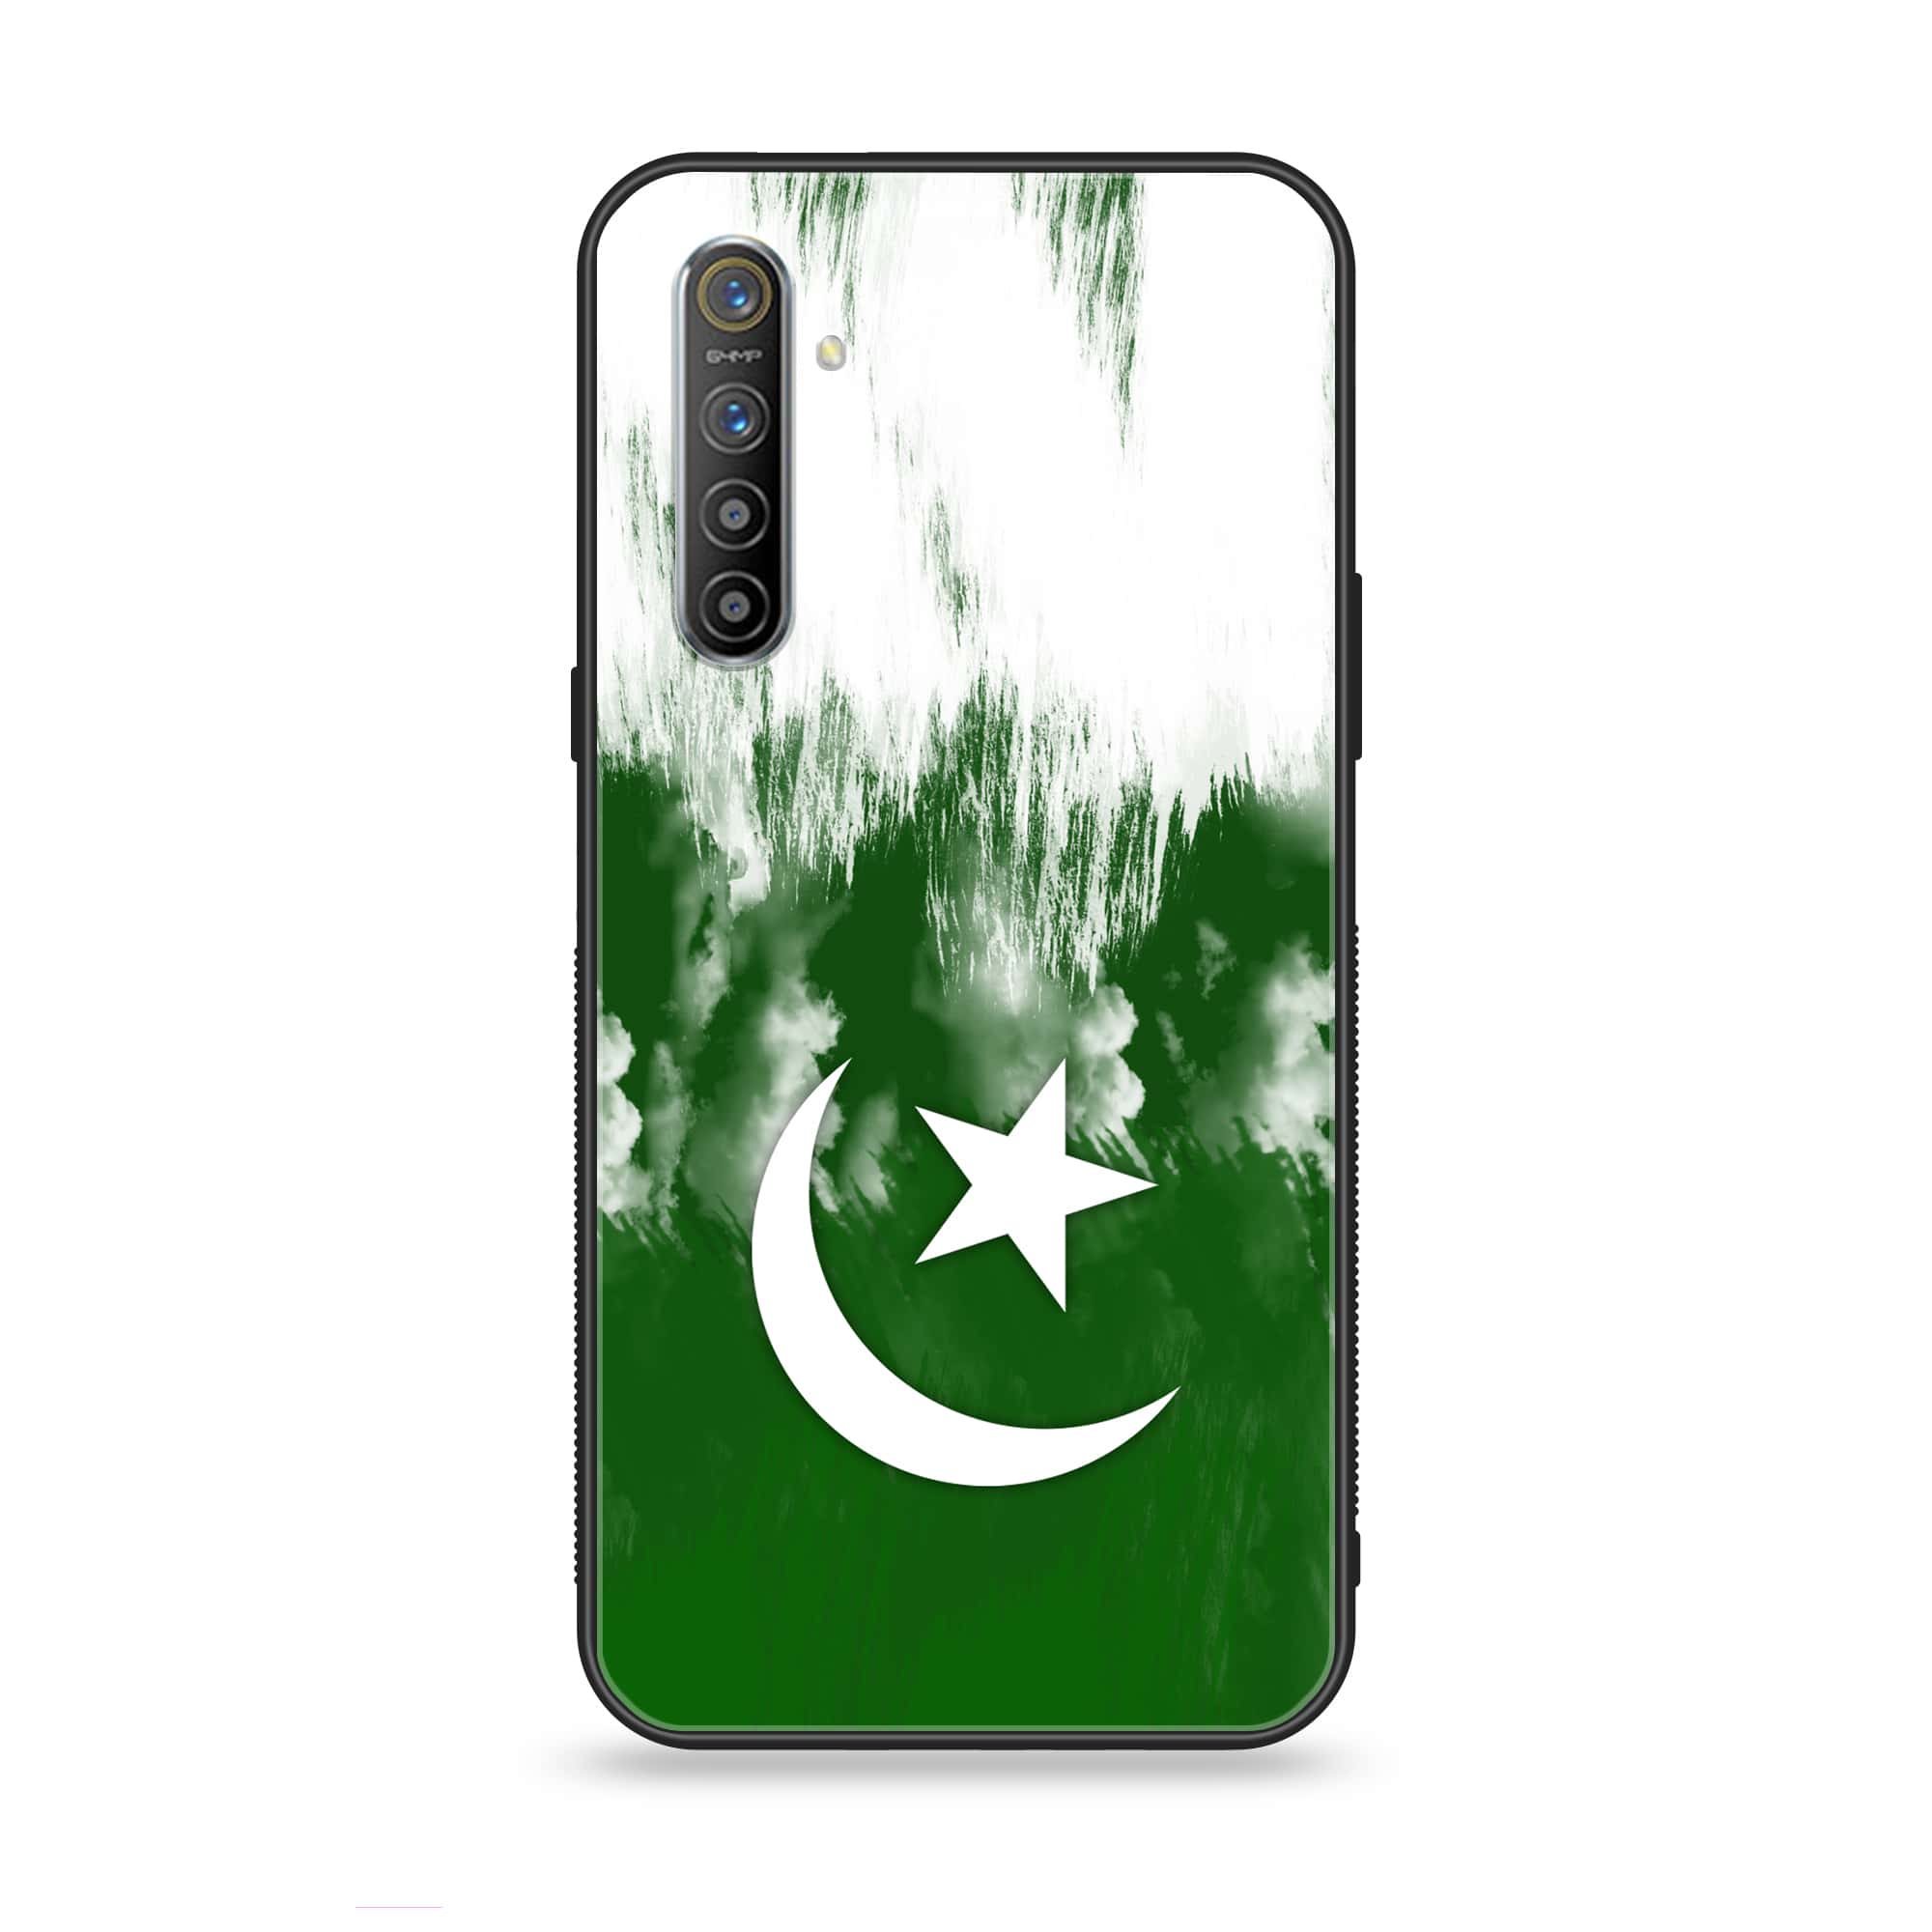 Realme XT - Pakistani Flag Series - Premium Printed Glass soft Bumper shock Proof Case